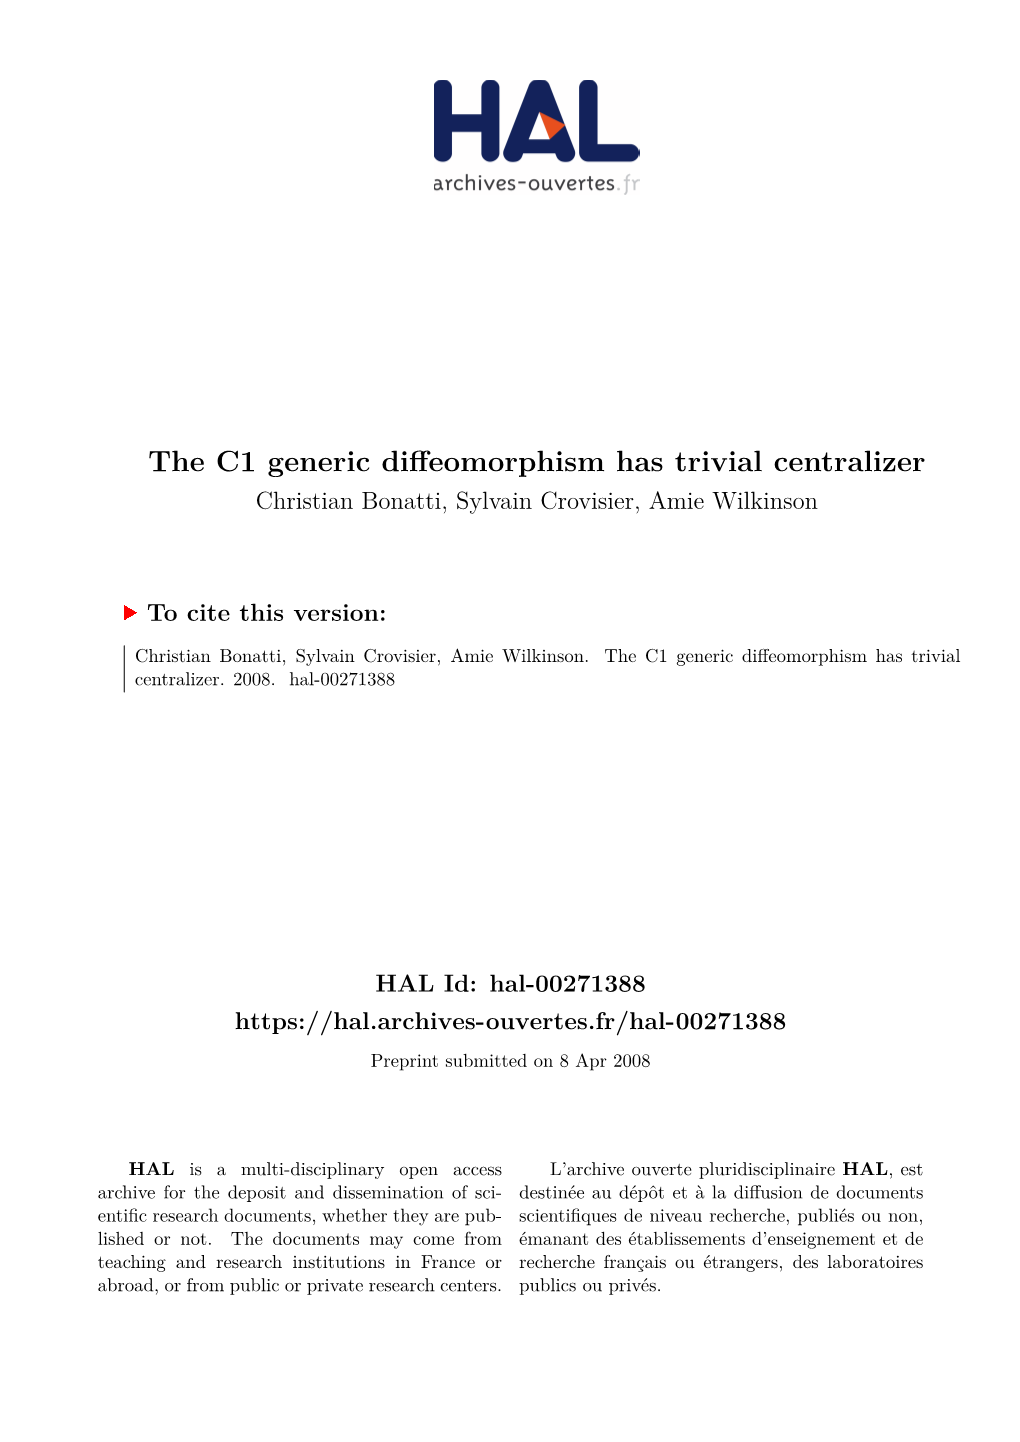 The C1 Generic Diffeomorphism Has Trivial Centralizer Christian Bonatti, Sylvain Crovisier, Amie Wilkinson